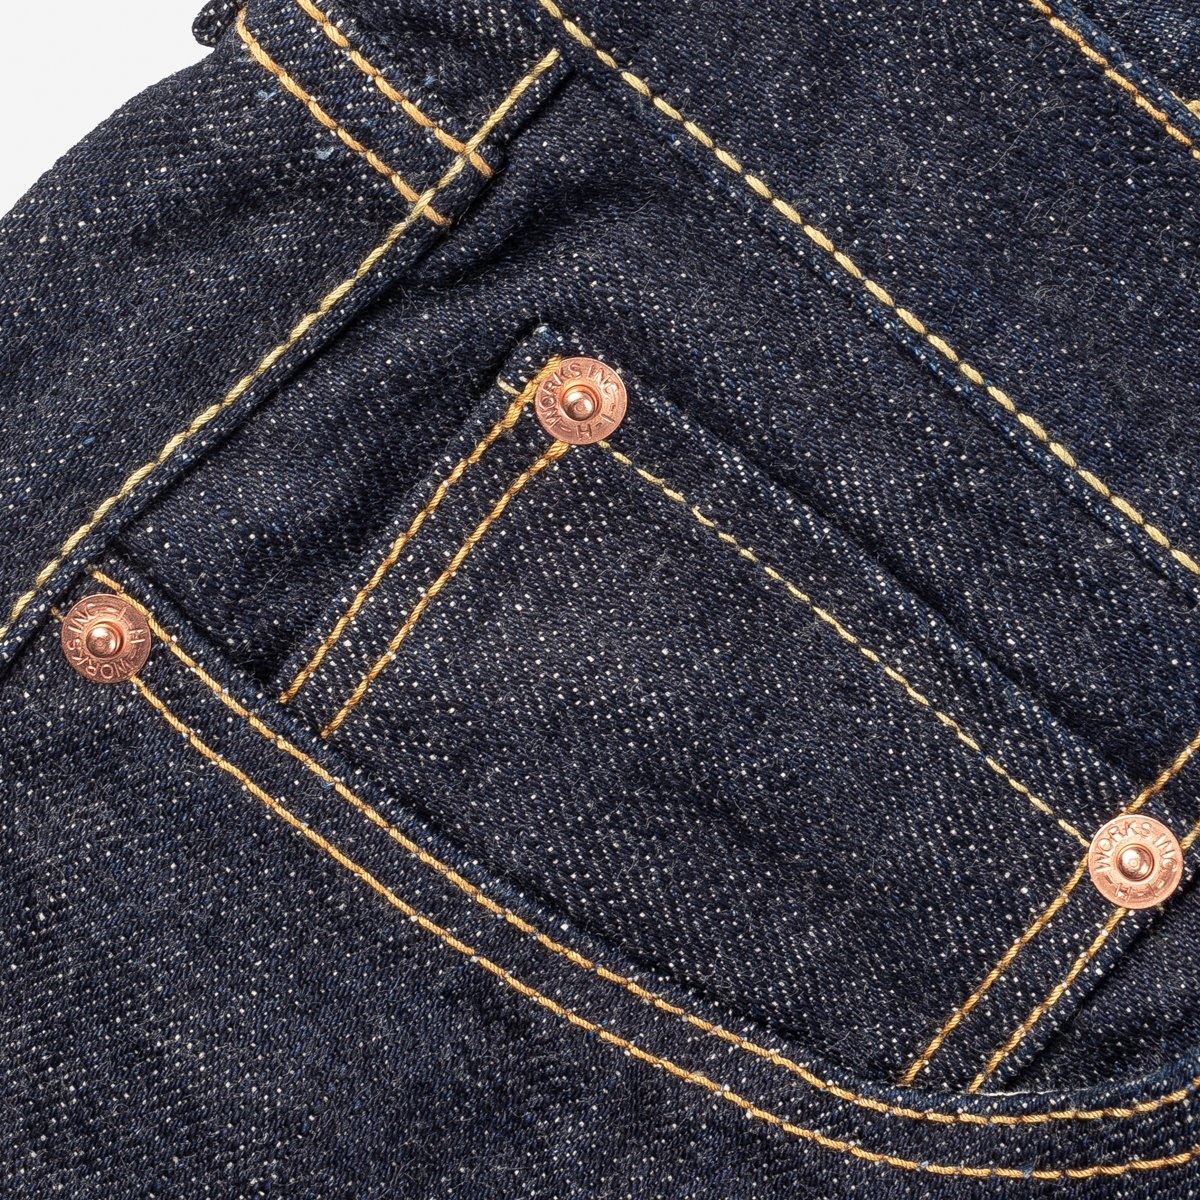 IH-555S-18 18oz Vintage Selvedge Denim Super Slim Cut Jeans - Indigo - 10